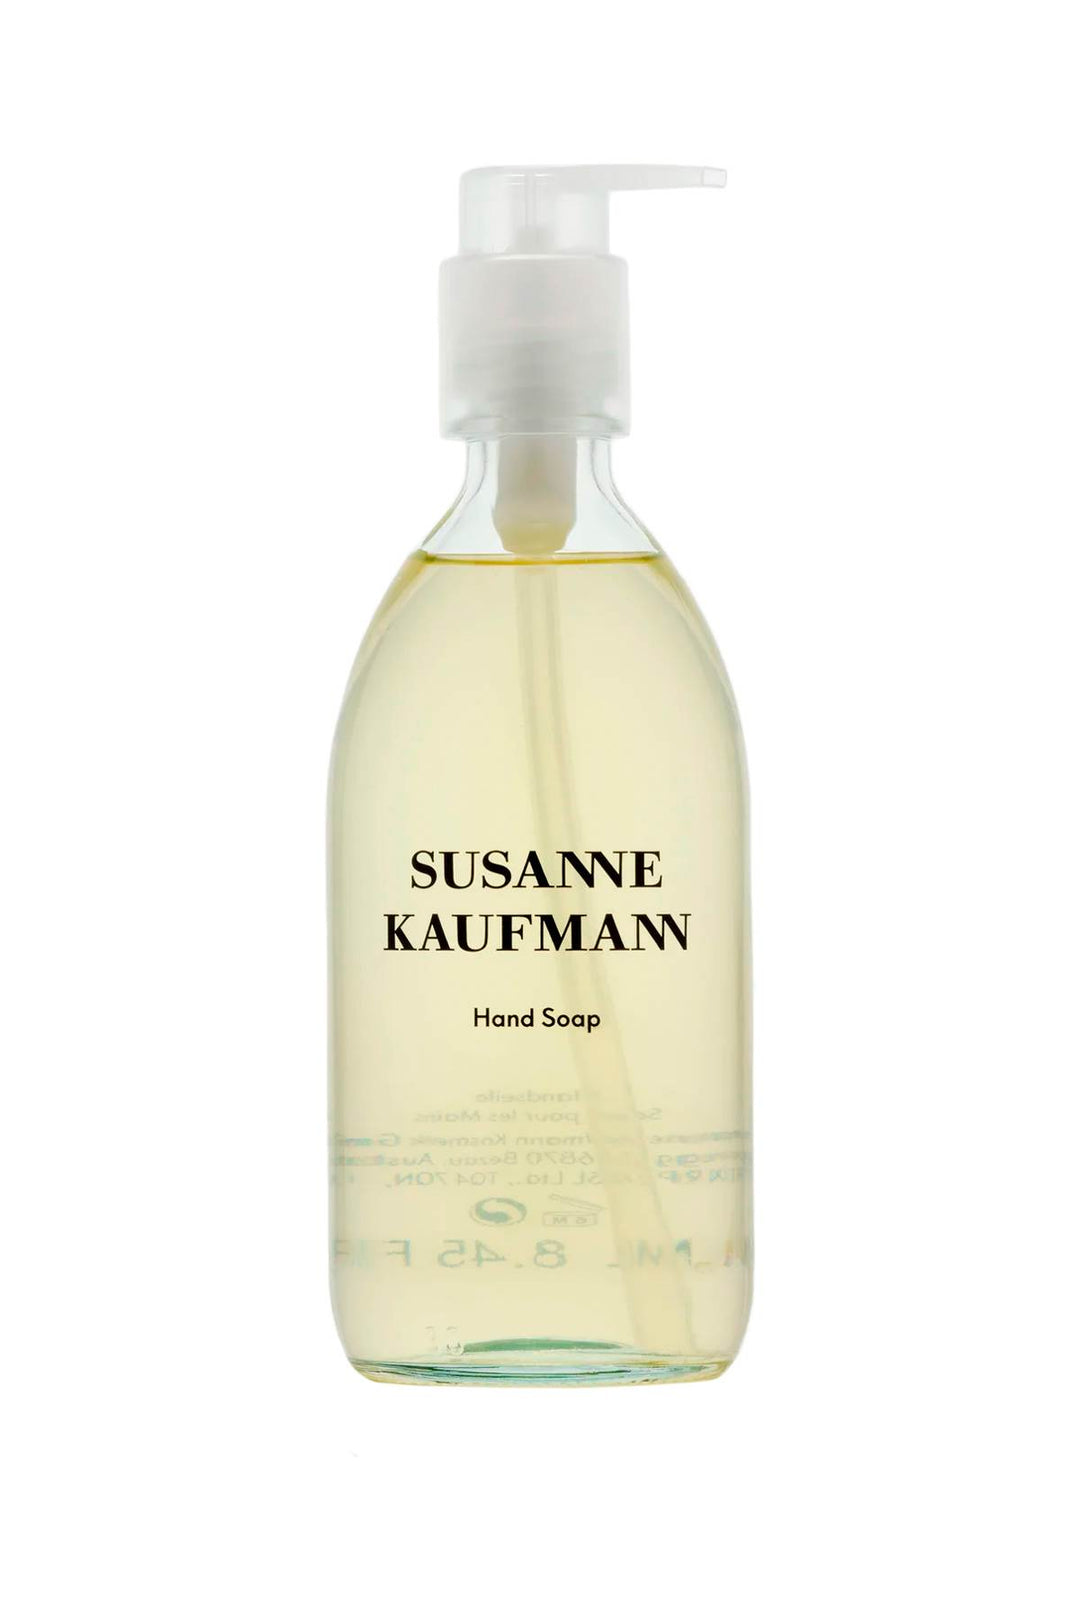 Susanne kaufmann hand soap - 250 ml-0